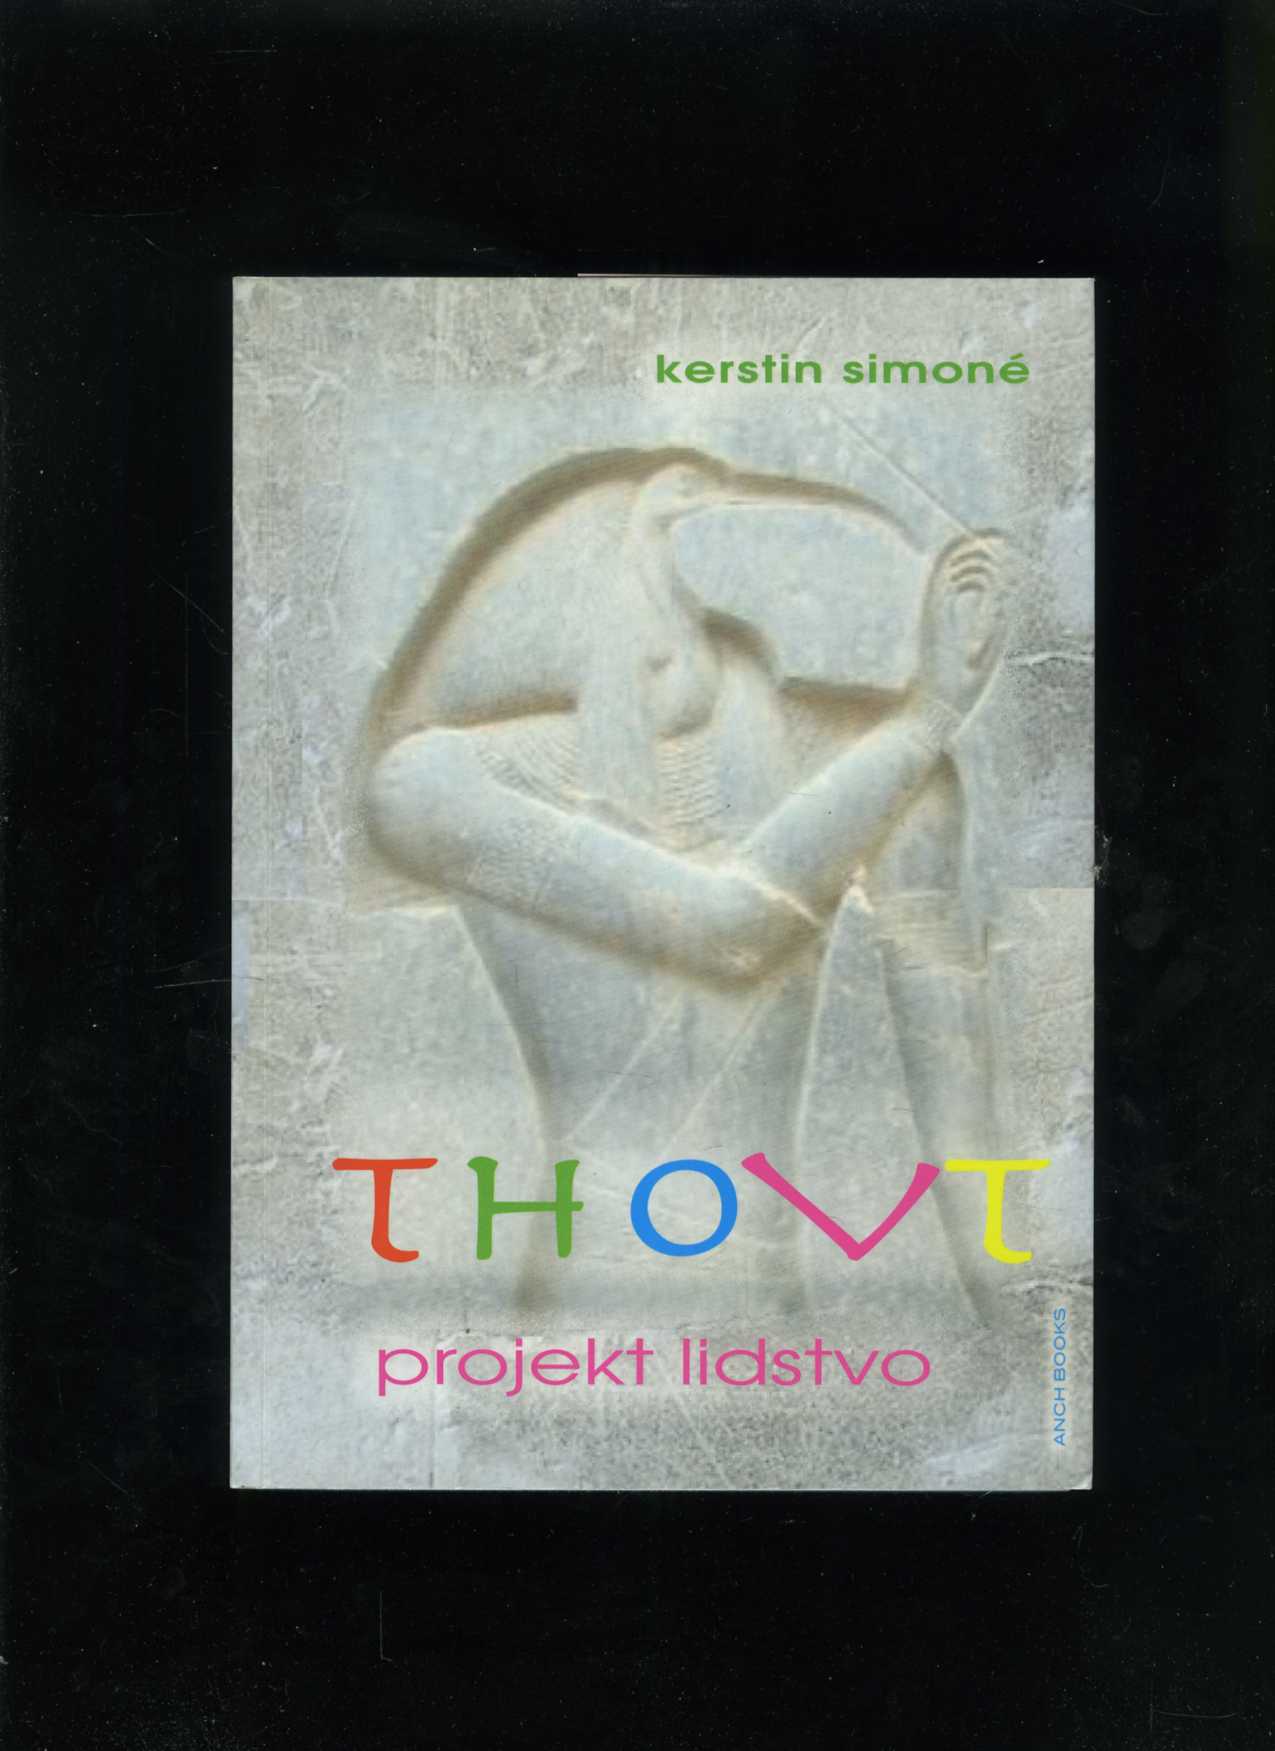 Thovt - projekt lidstvo (Kerstin Simoné)